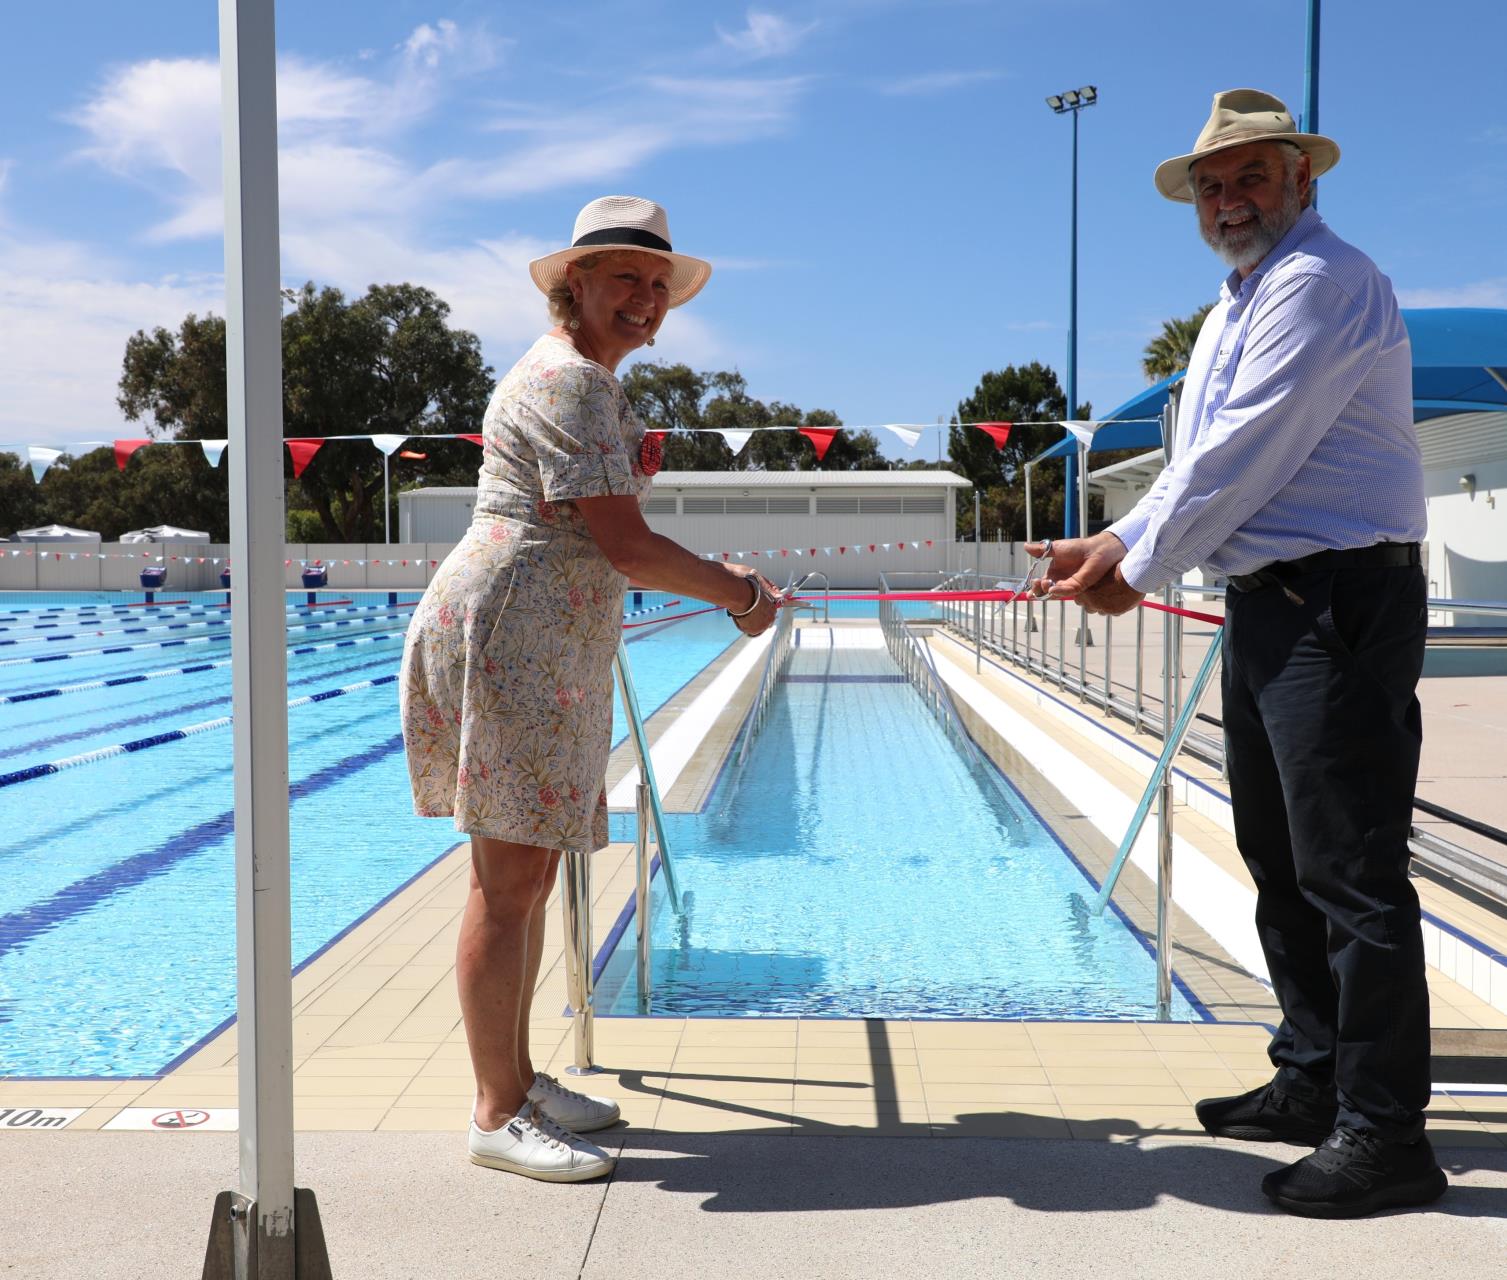 Aquarena outdoor pool reopens to public